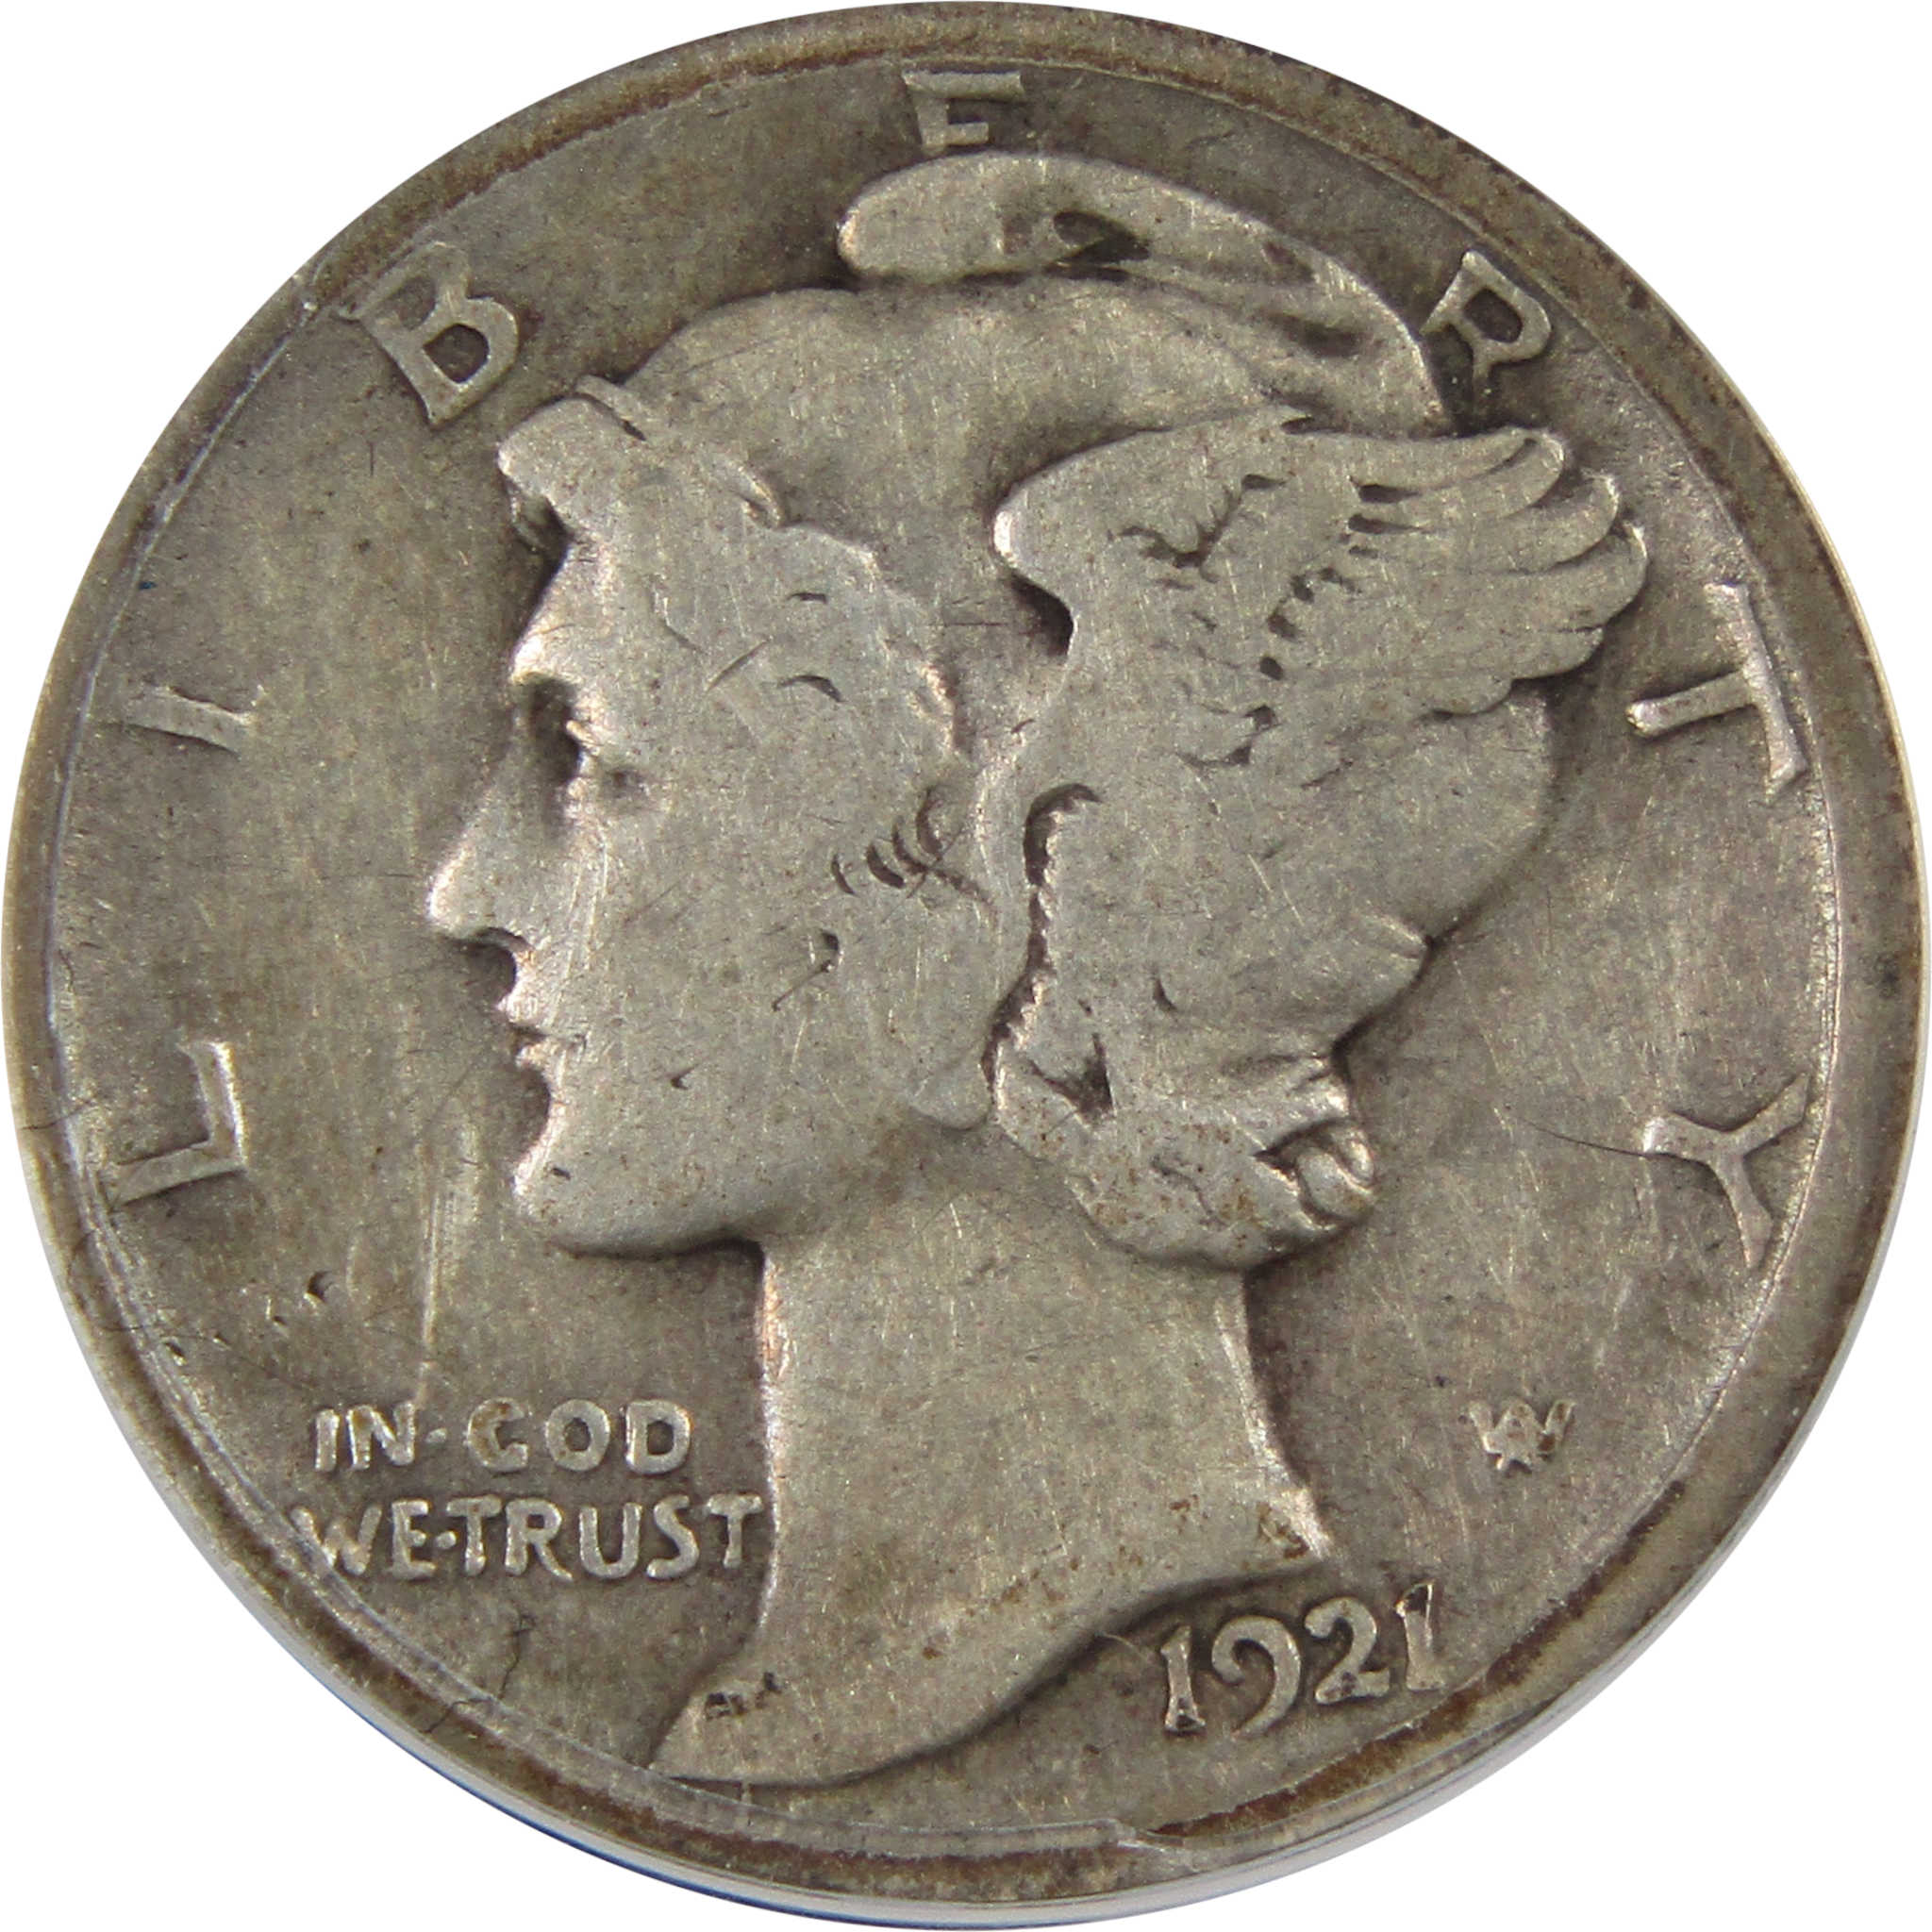 1921 D Mercury Dime VG 8 ANACS 90% Silver 10c Coin SKU:I7939